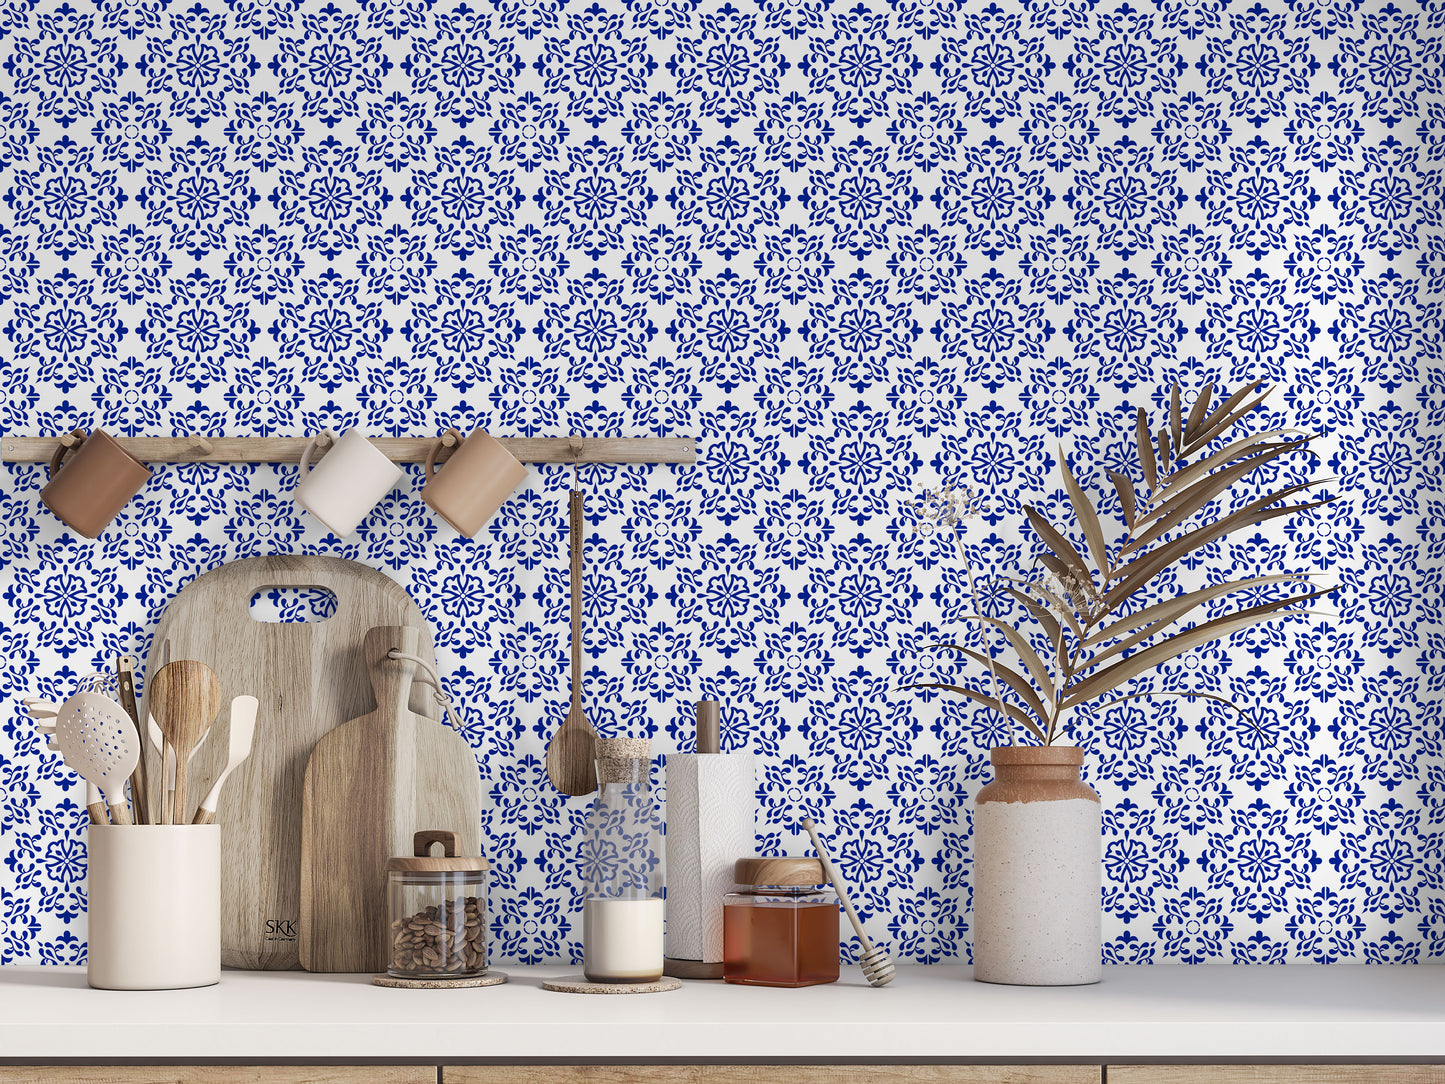 Blue & White Spanish Style Peel & Stick Tile Stickers